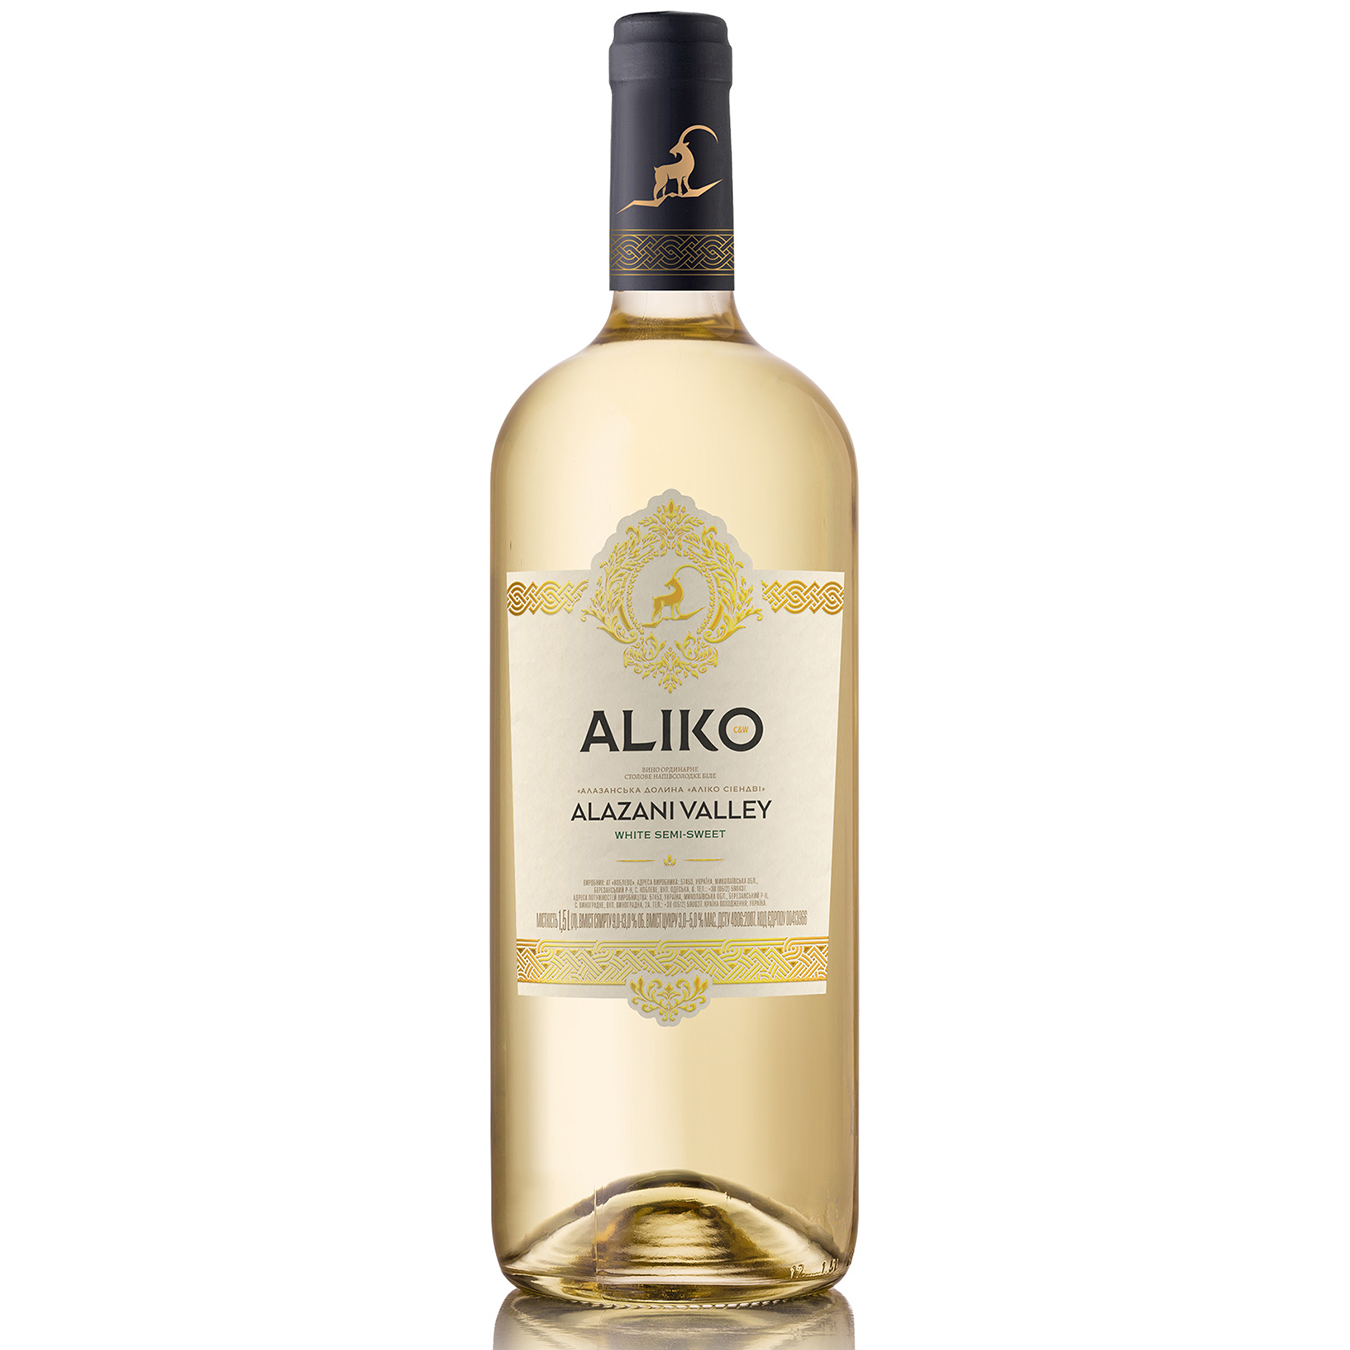 Wine Aliko Alazanskaya dolina white semi-sweet 9-13% 1.5 l